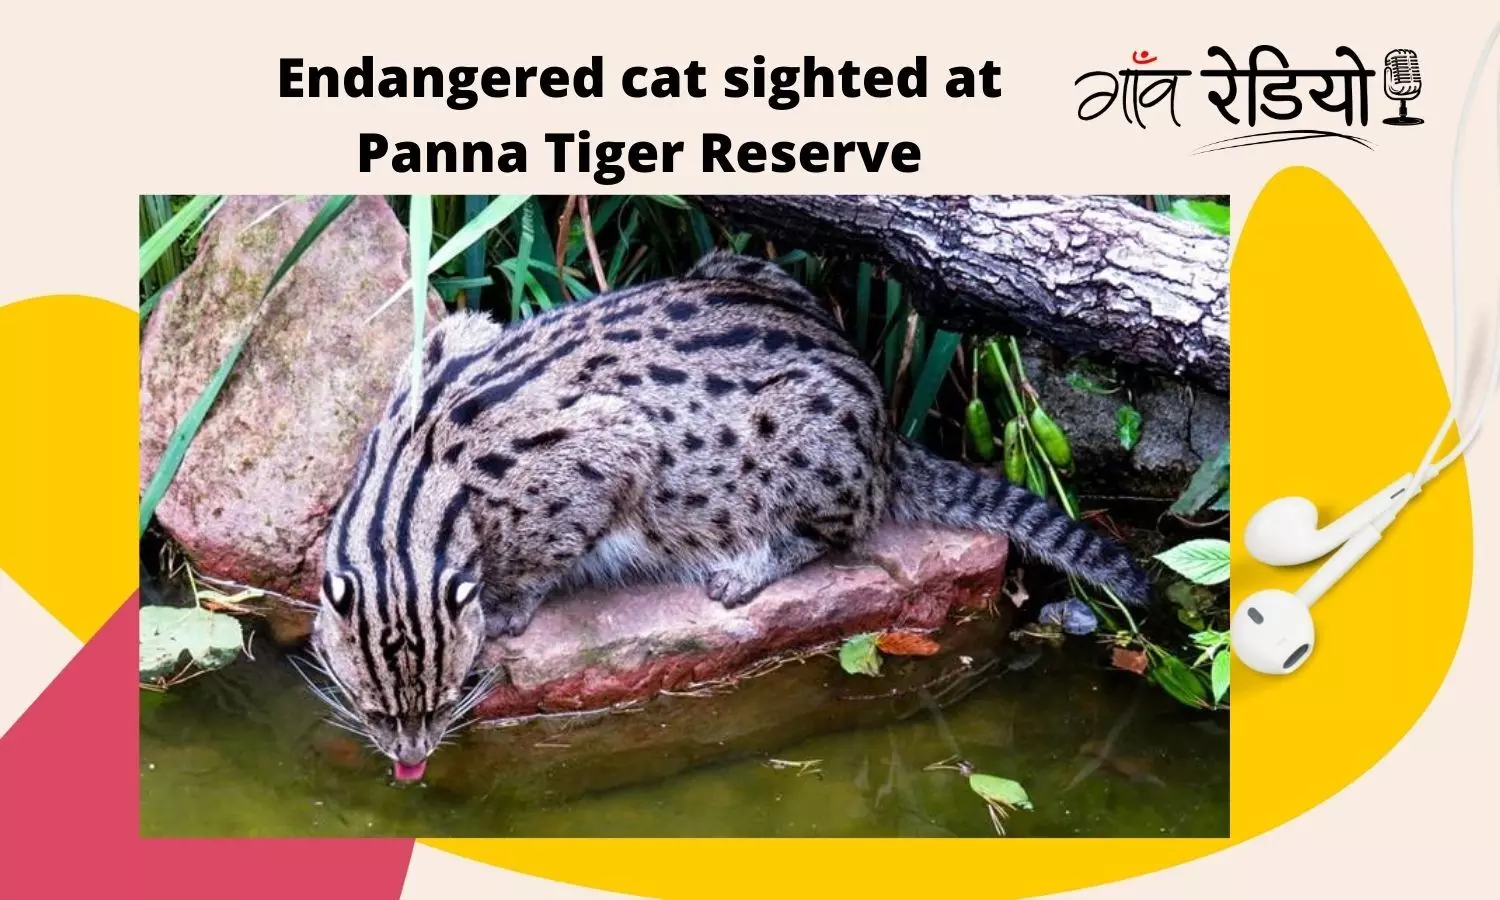 Gaon Radio: In rare sighting, endangered fishing cat captured on camera at Panna Tiger Reserve